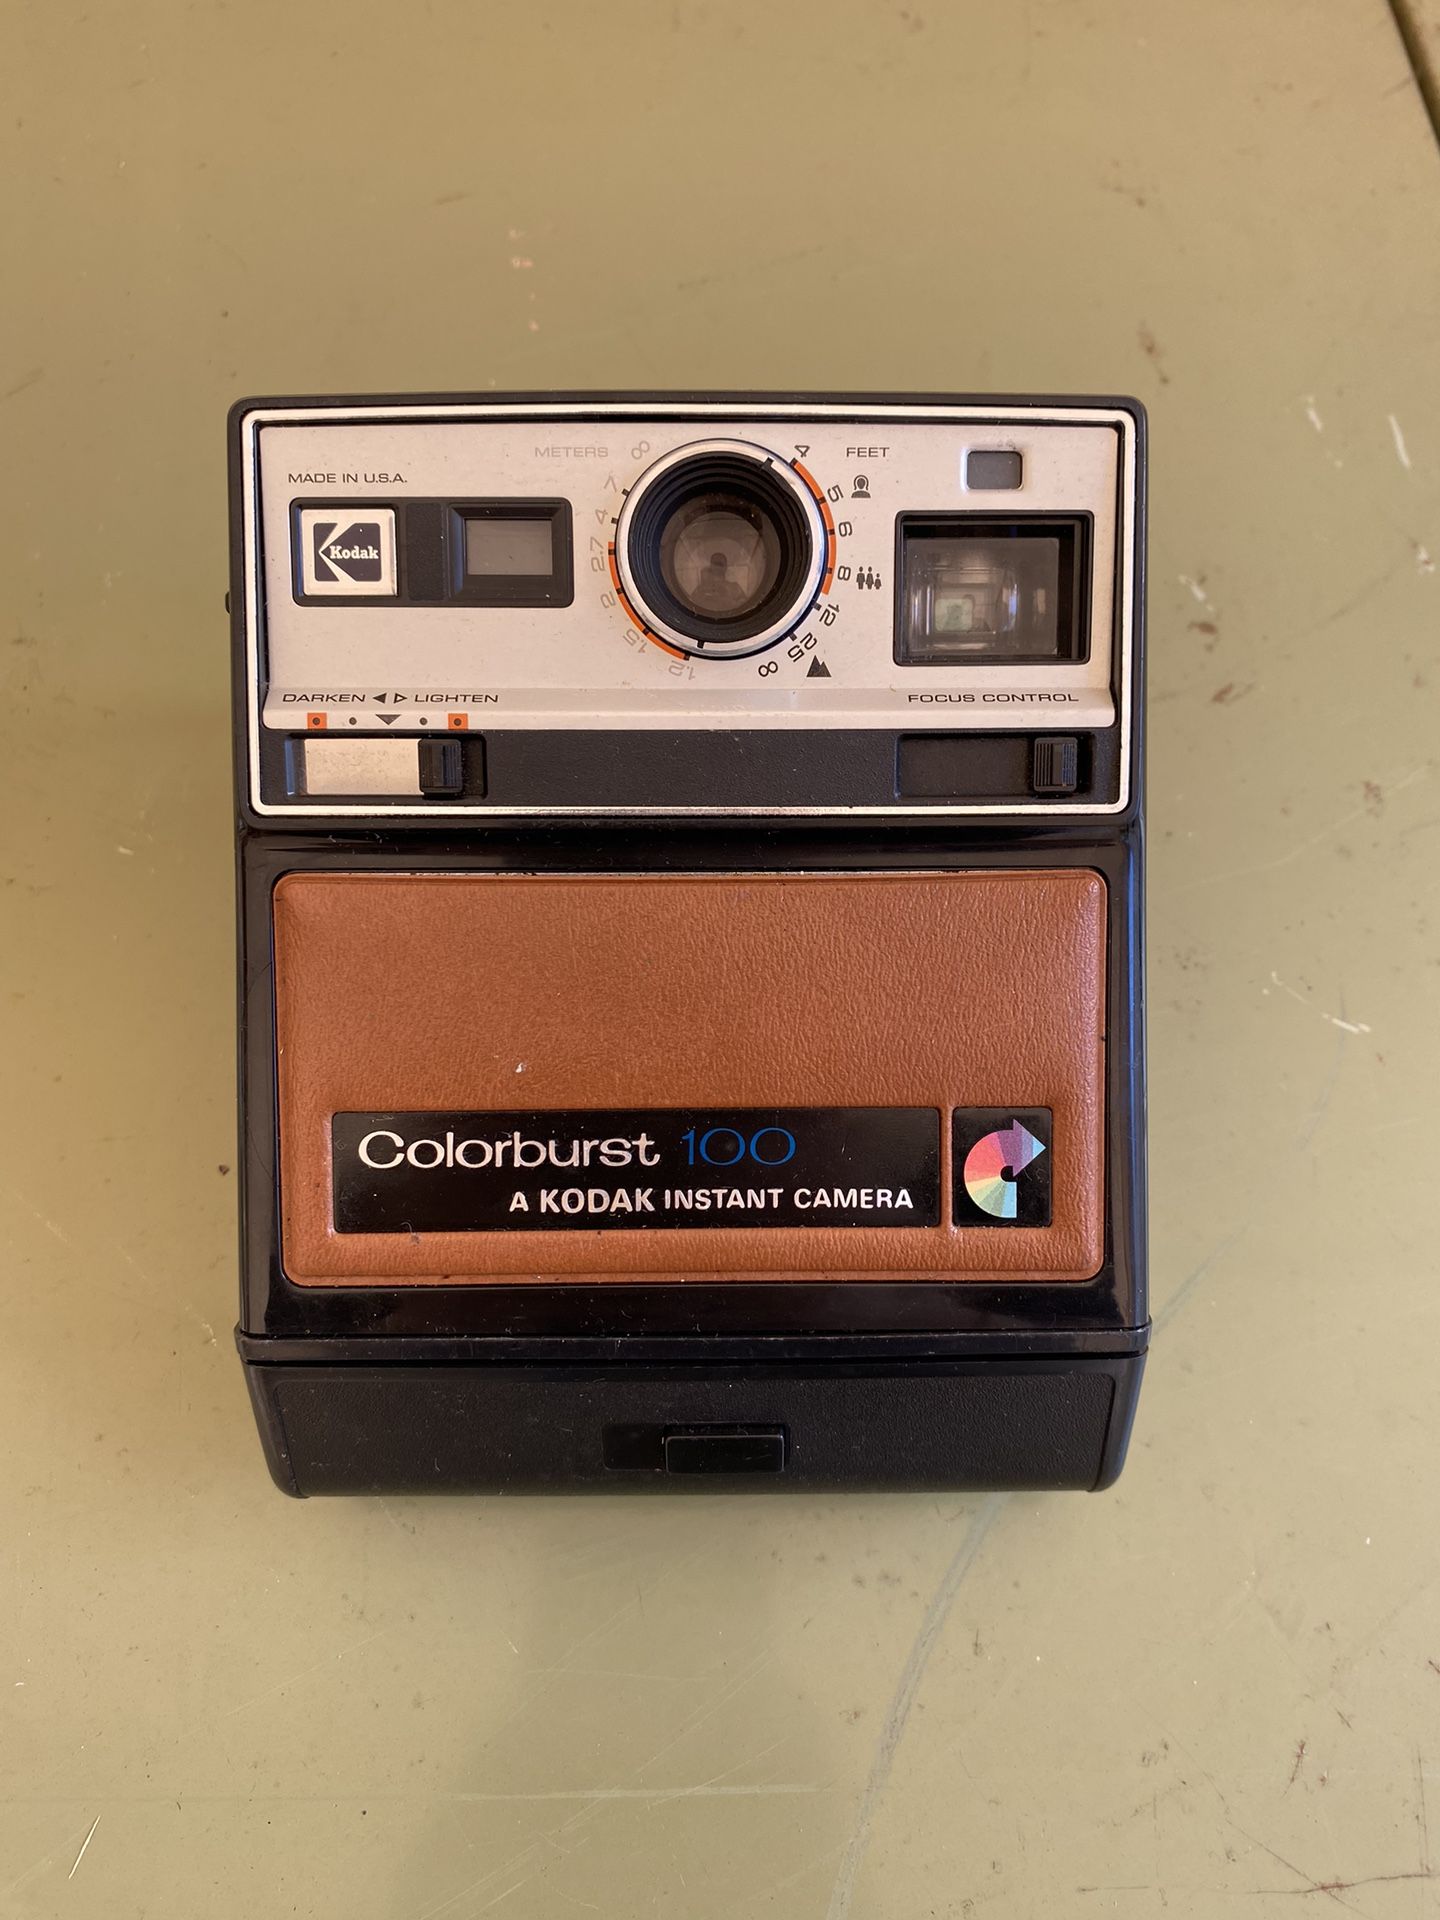 Colorburst 100 - Kodak Instant Camera